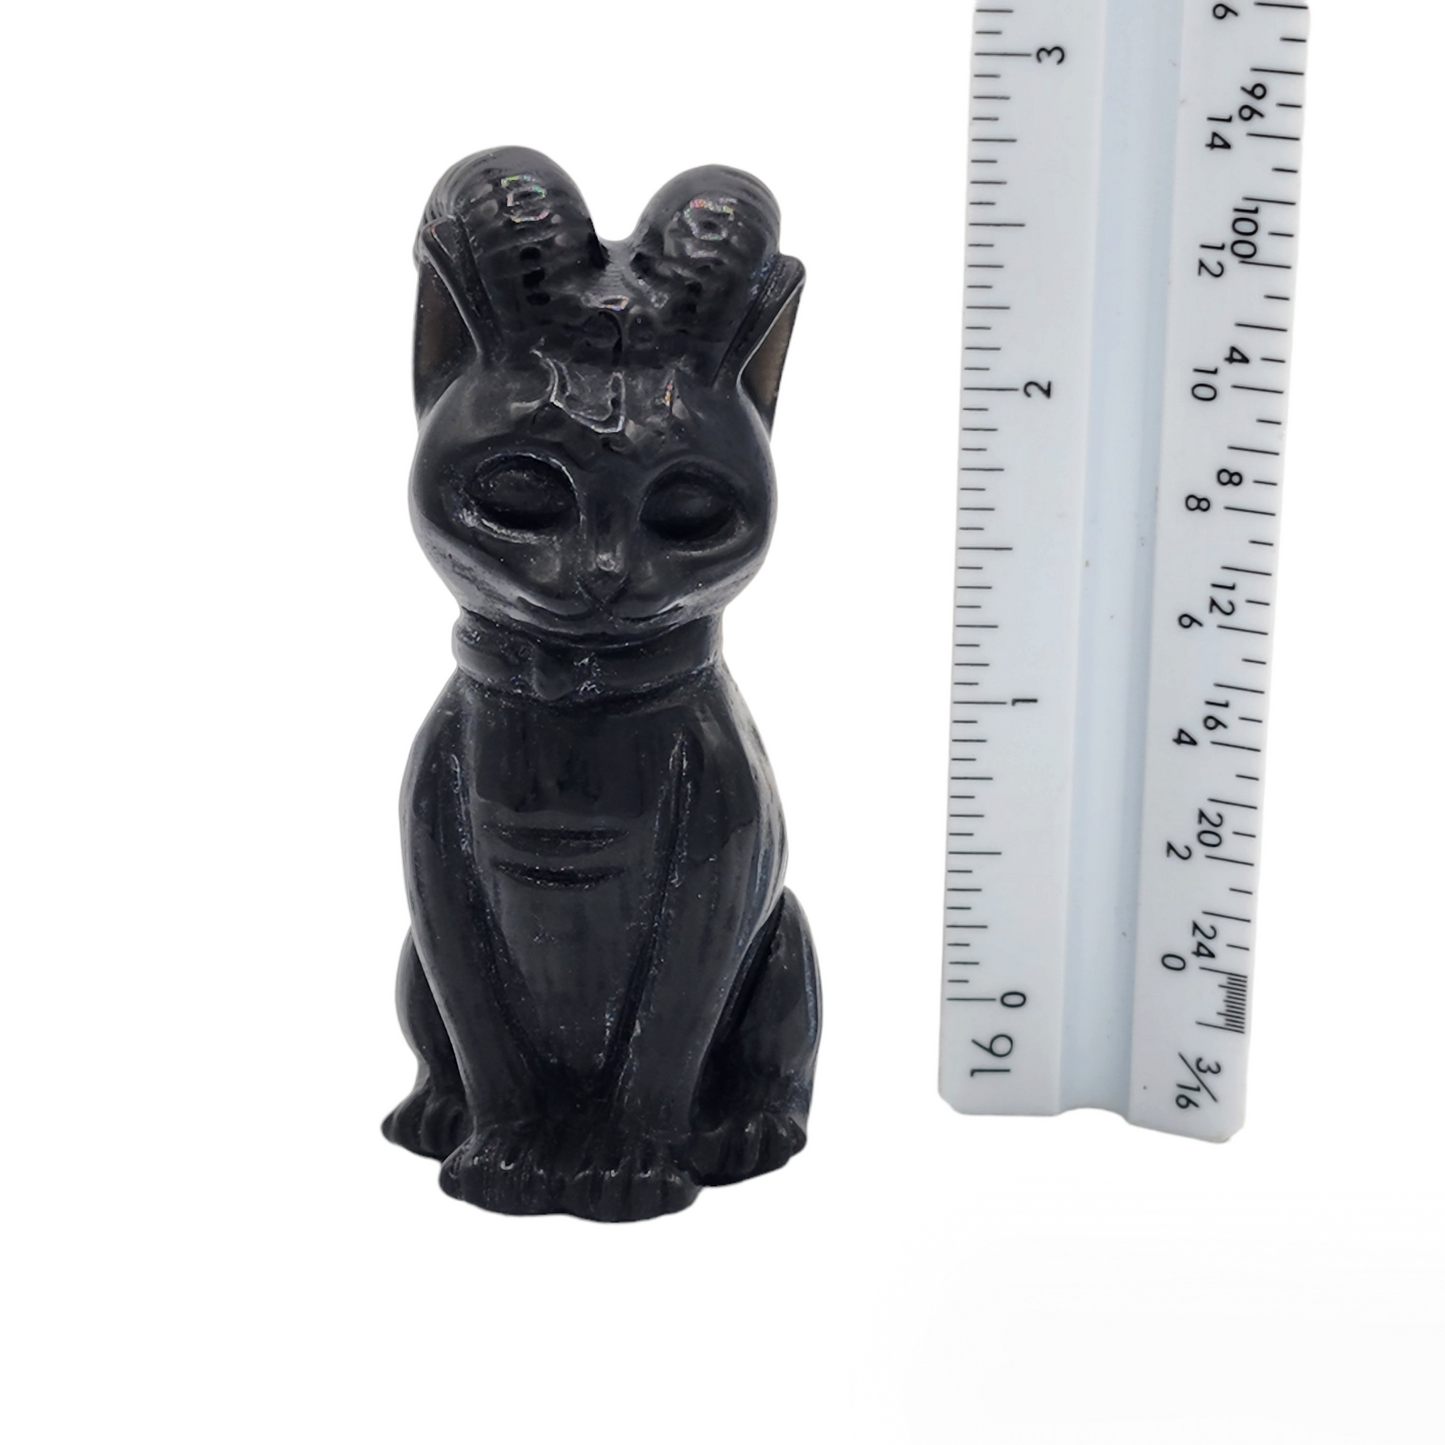 Obsidian Baphomet Cat Figurine